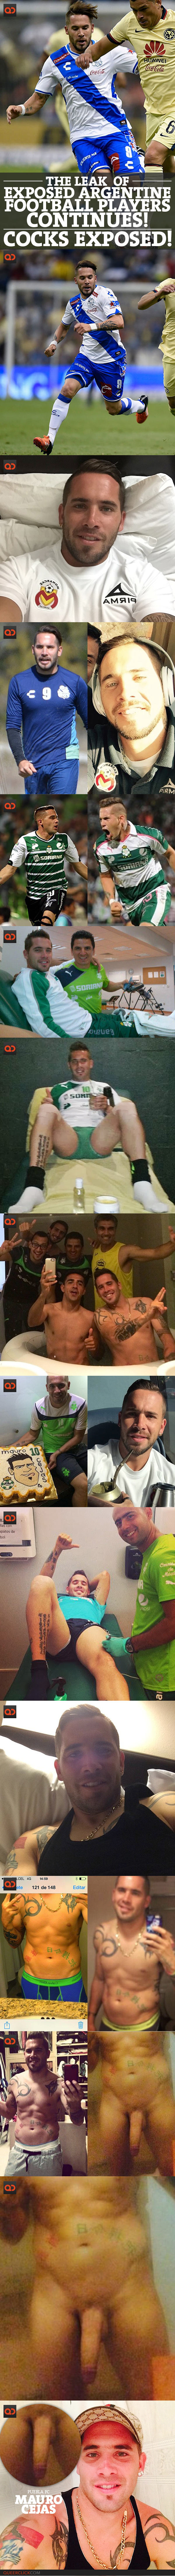 qc-exposed_celebs_argentine_football_players_gonzalo_piovi_matias_caruzzo_mauro_cejas_cocks_exposed-collage02